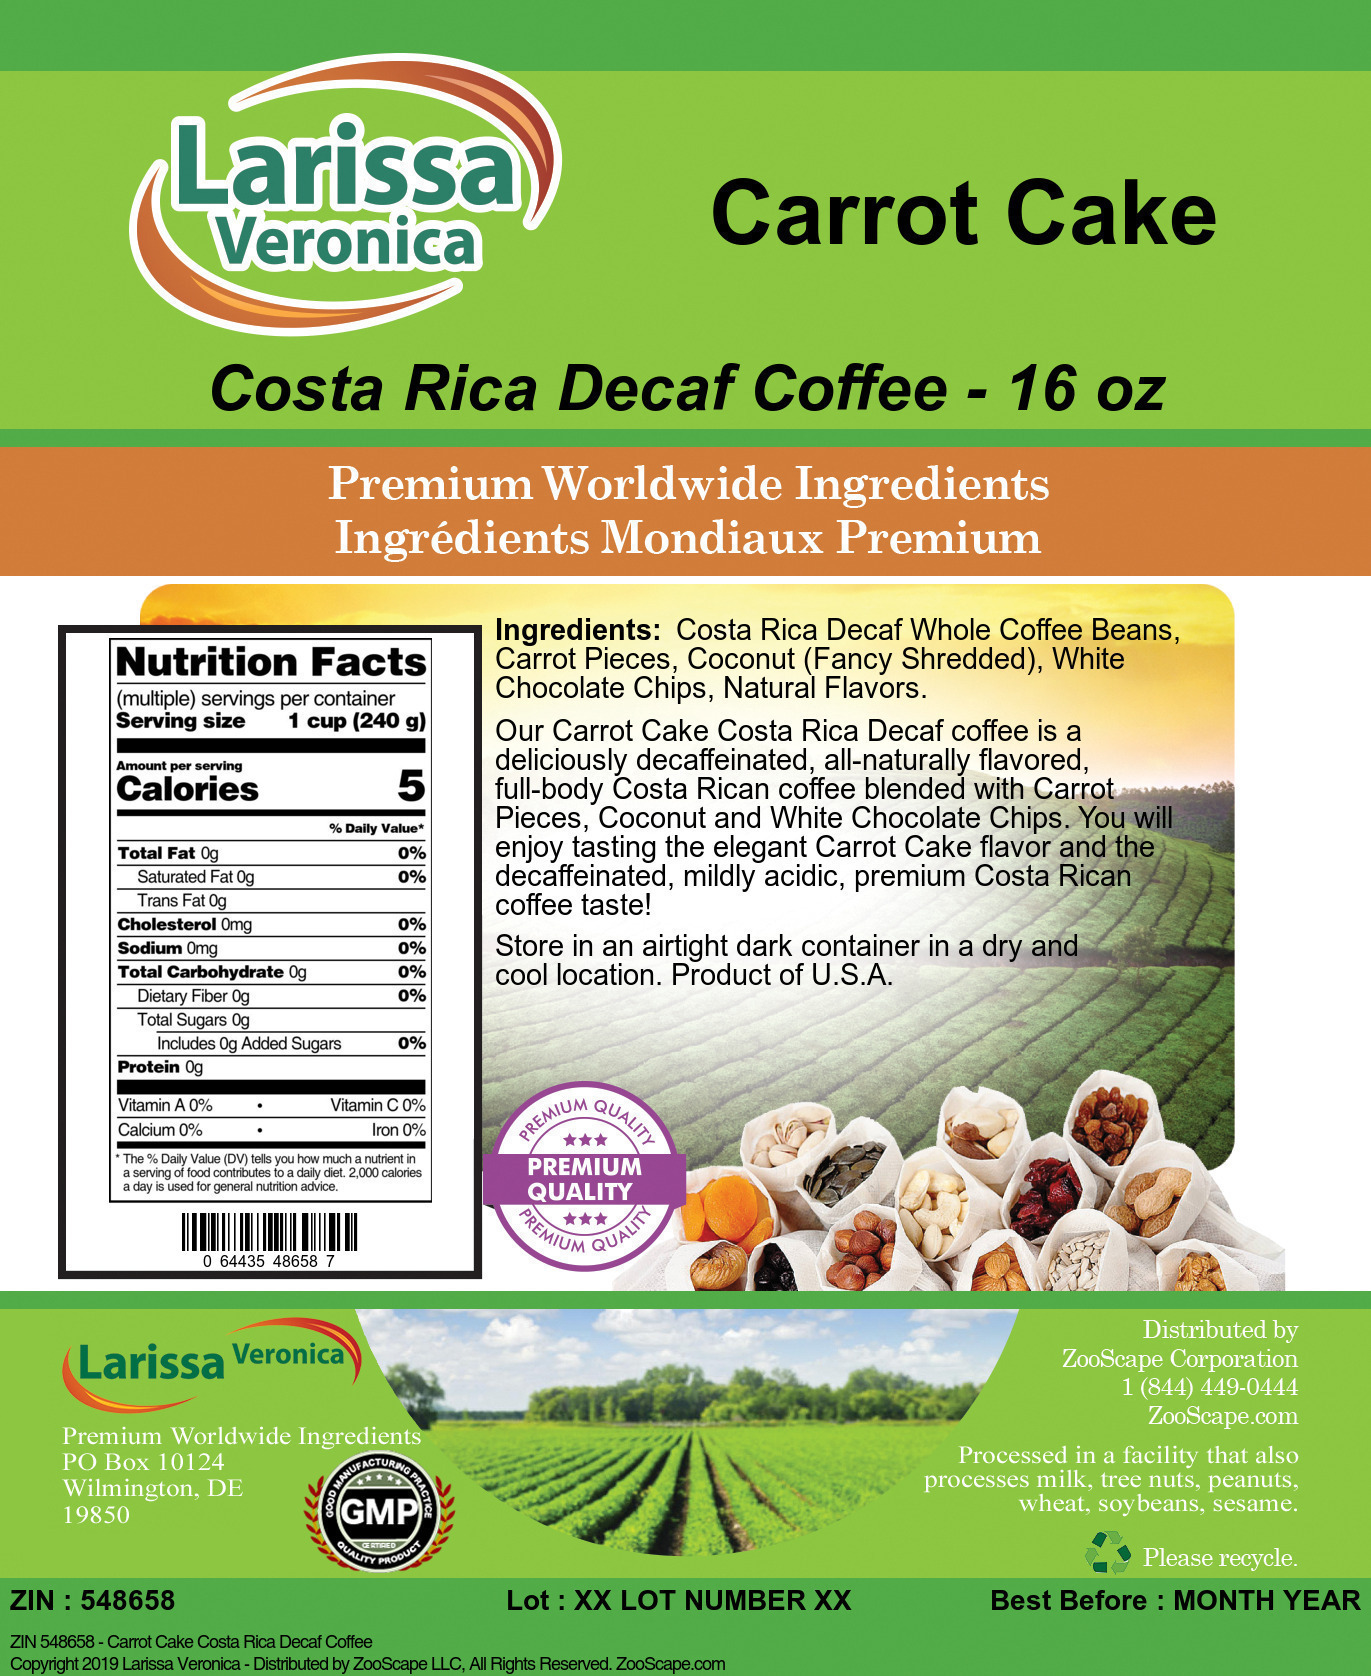 Carrot Cake Costa Rica Decaf Coffee - Label